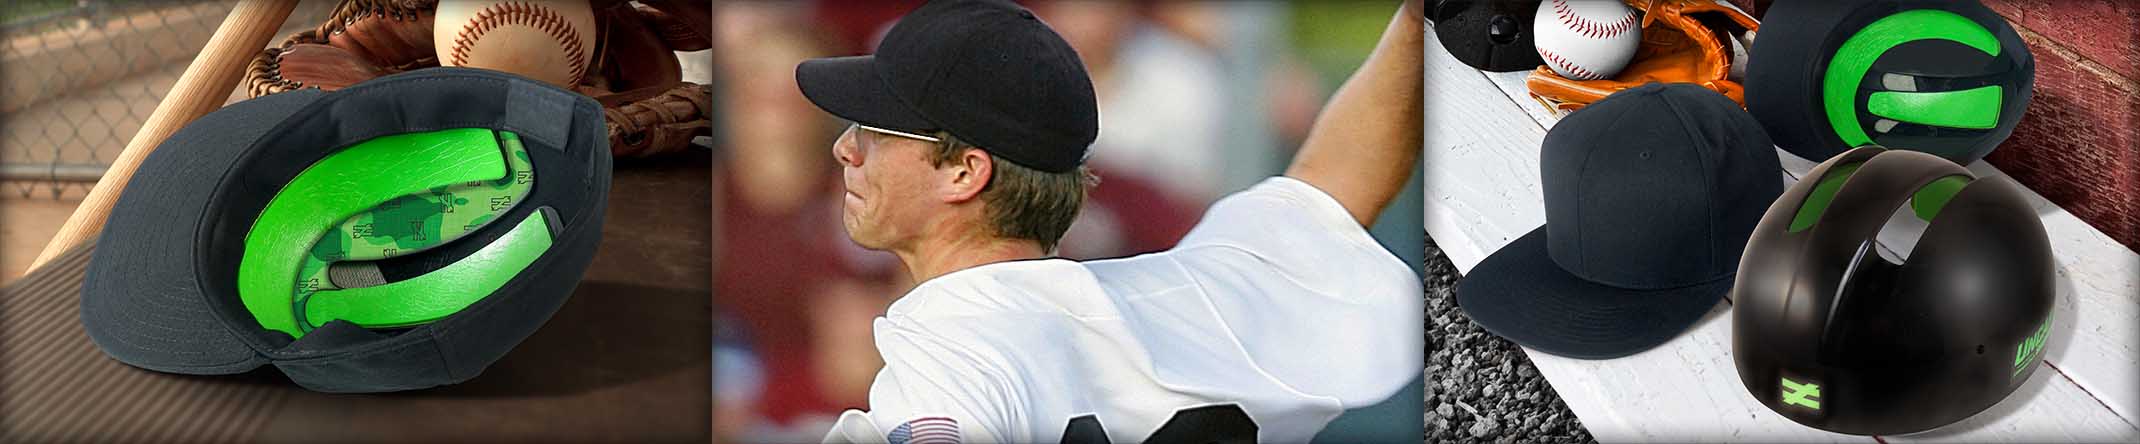 baseball-hat-concussion-protection-uncap-insert